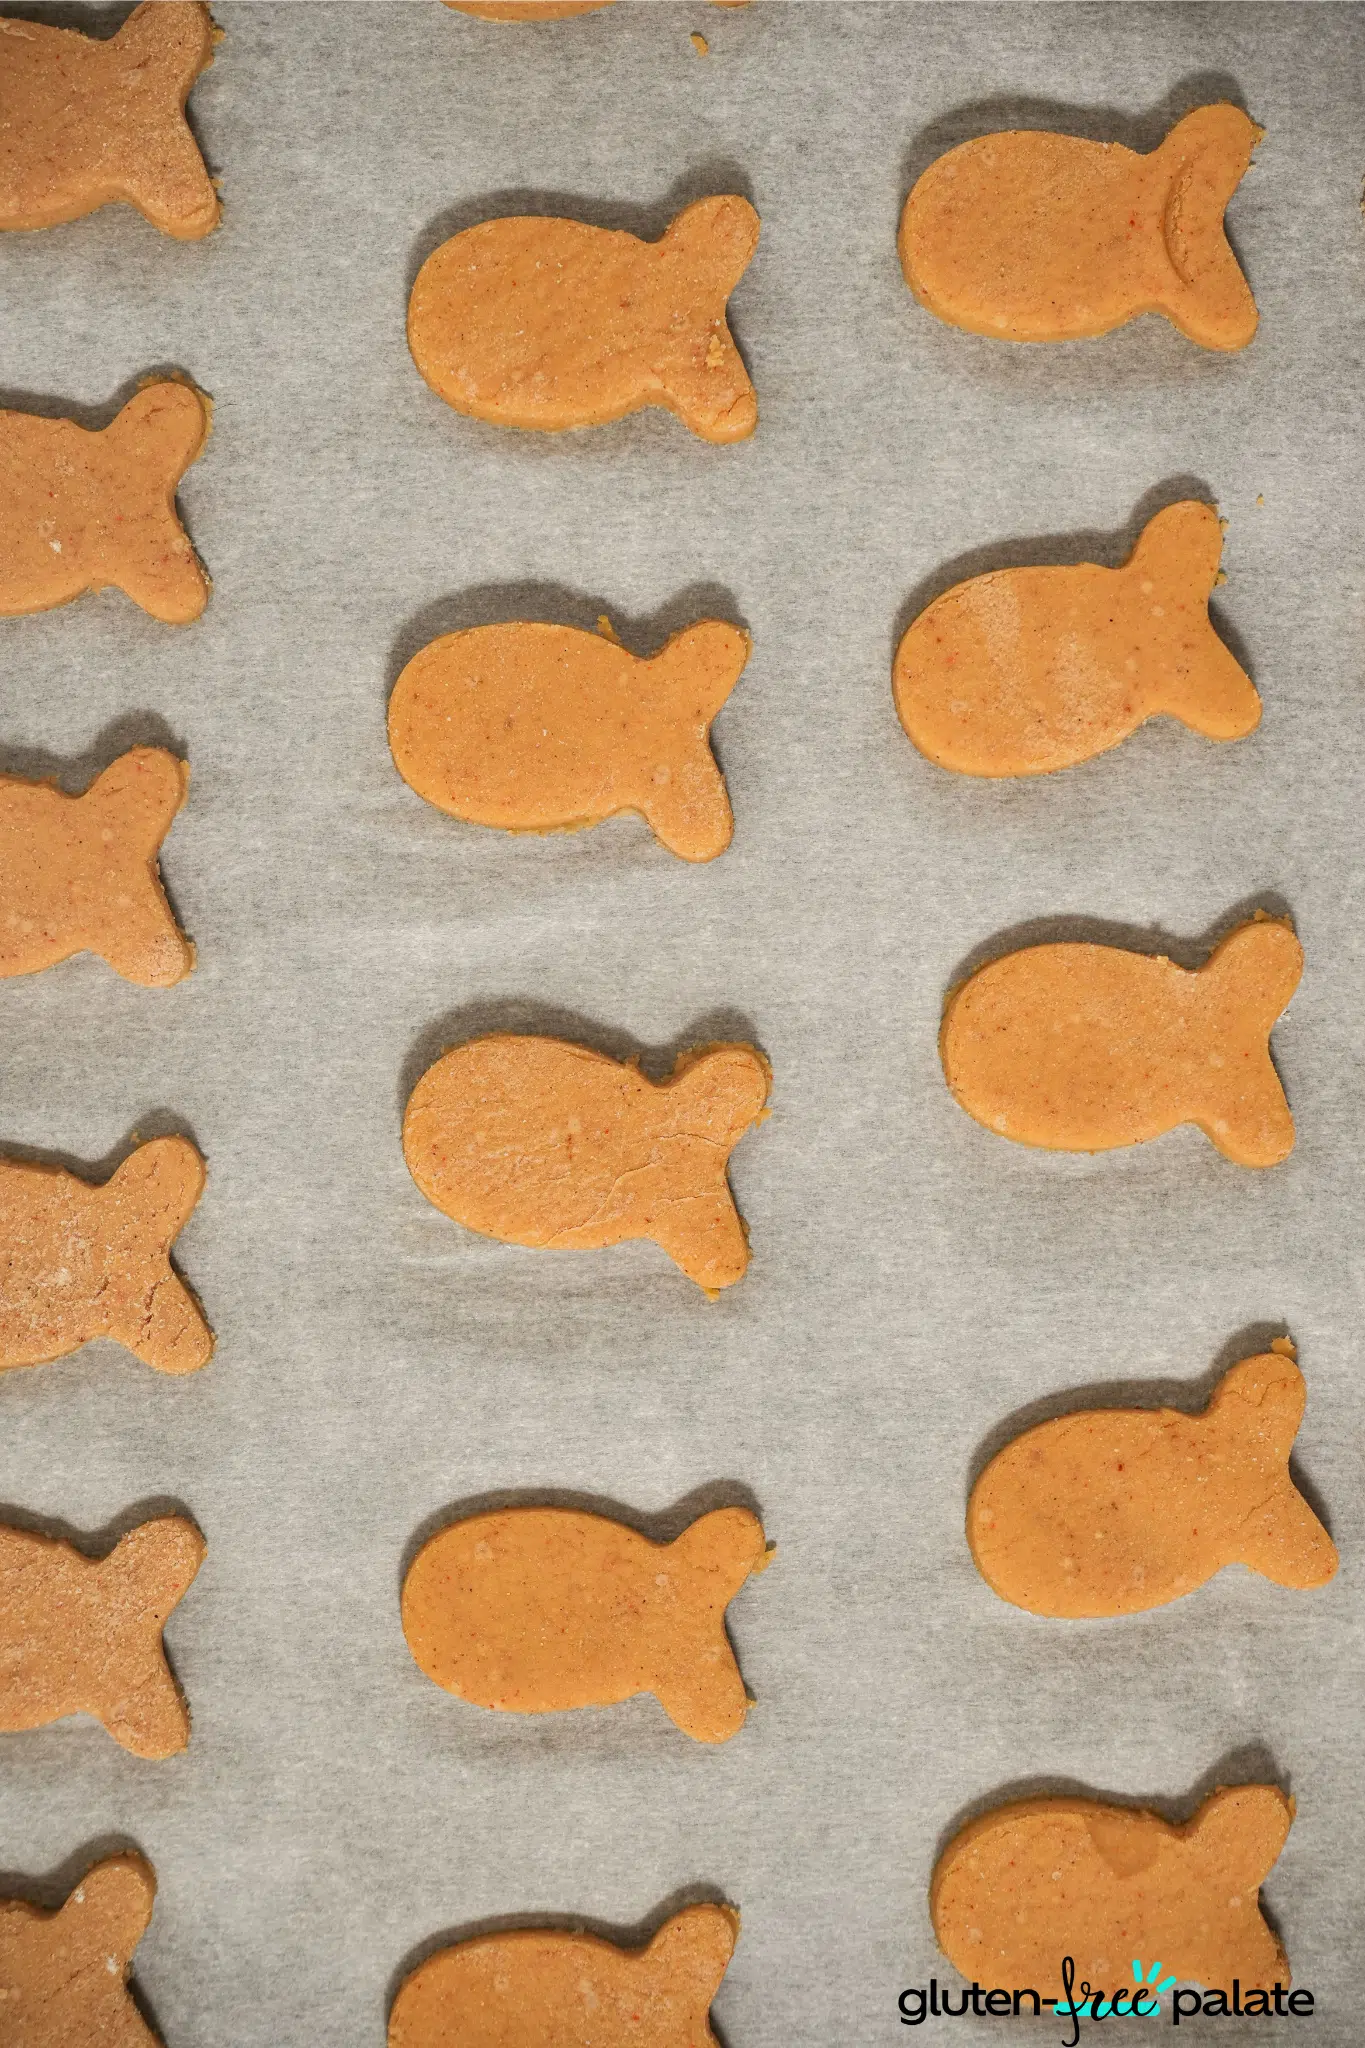 Gluten-free goldfish on a baking tray